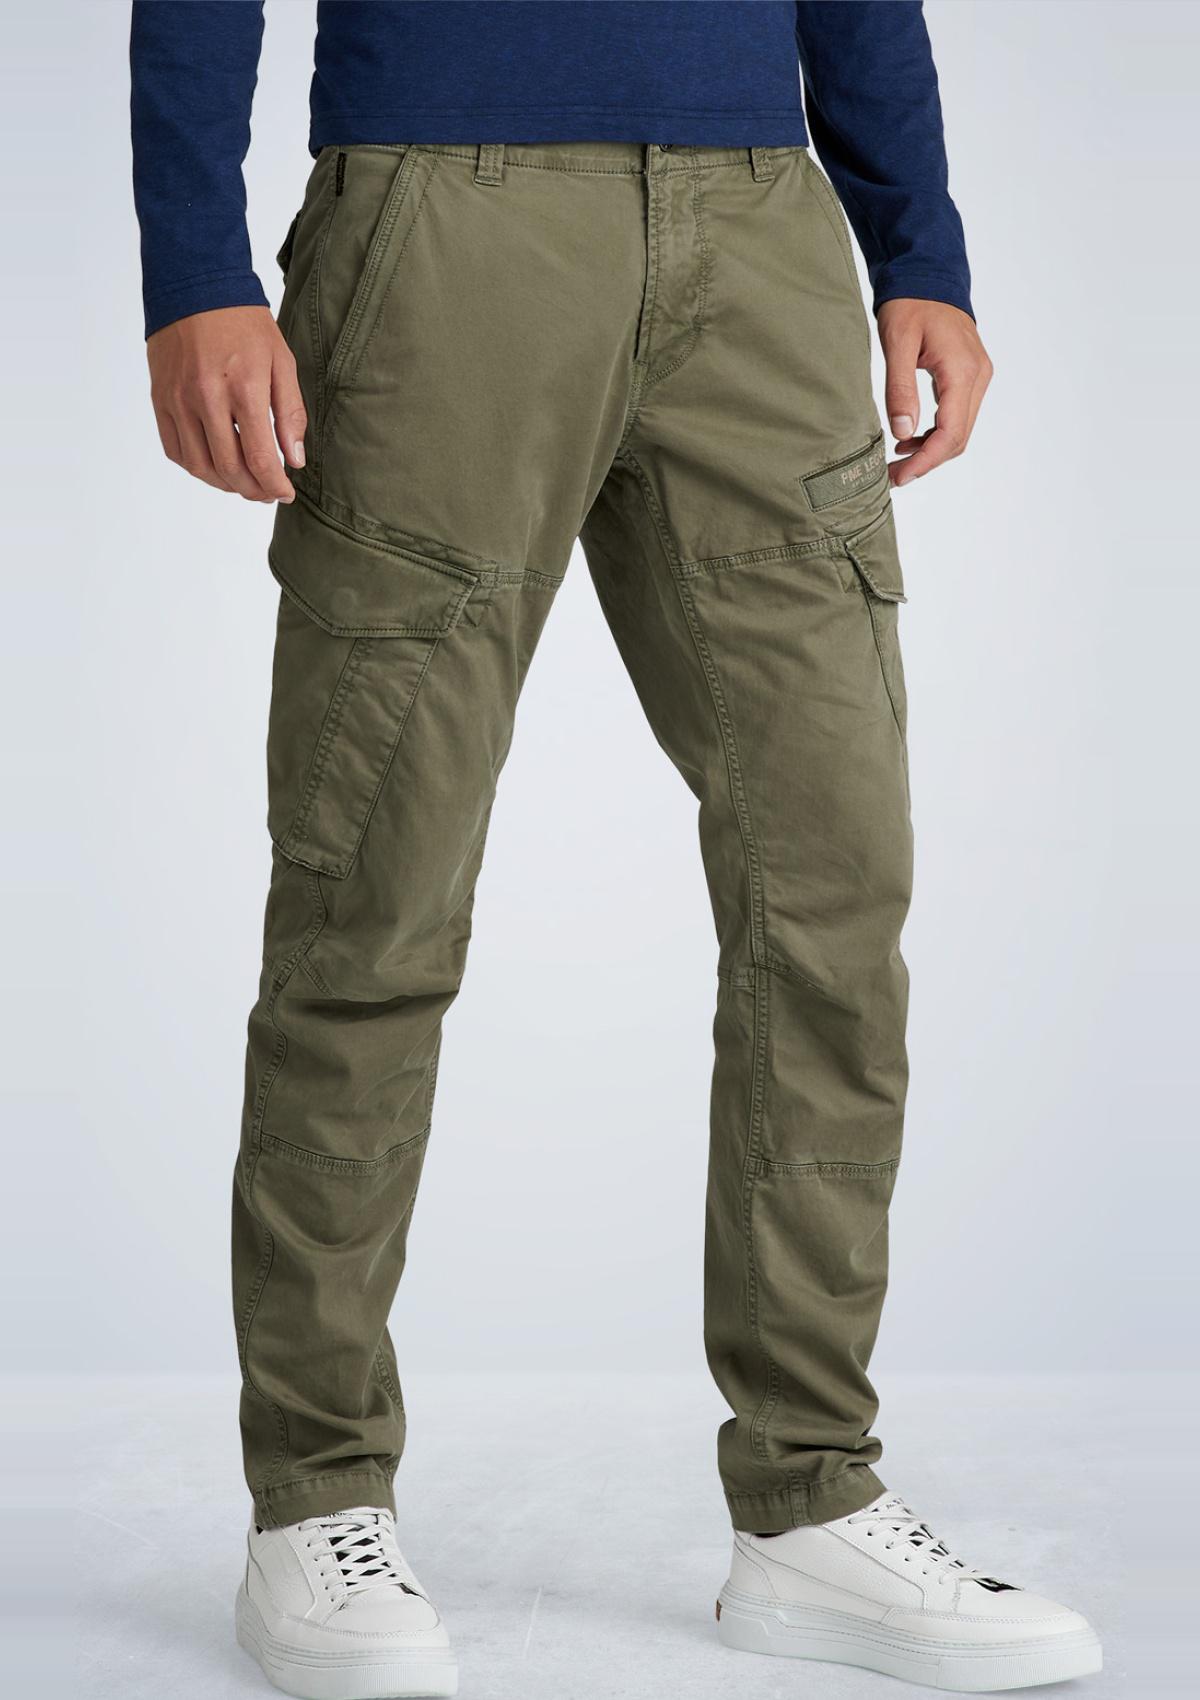 Online PANTS – STRETCH Jeans-Land Jeans-Land TWILL PME Legend CARGO Freizeithosen - Shopping CARGO